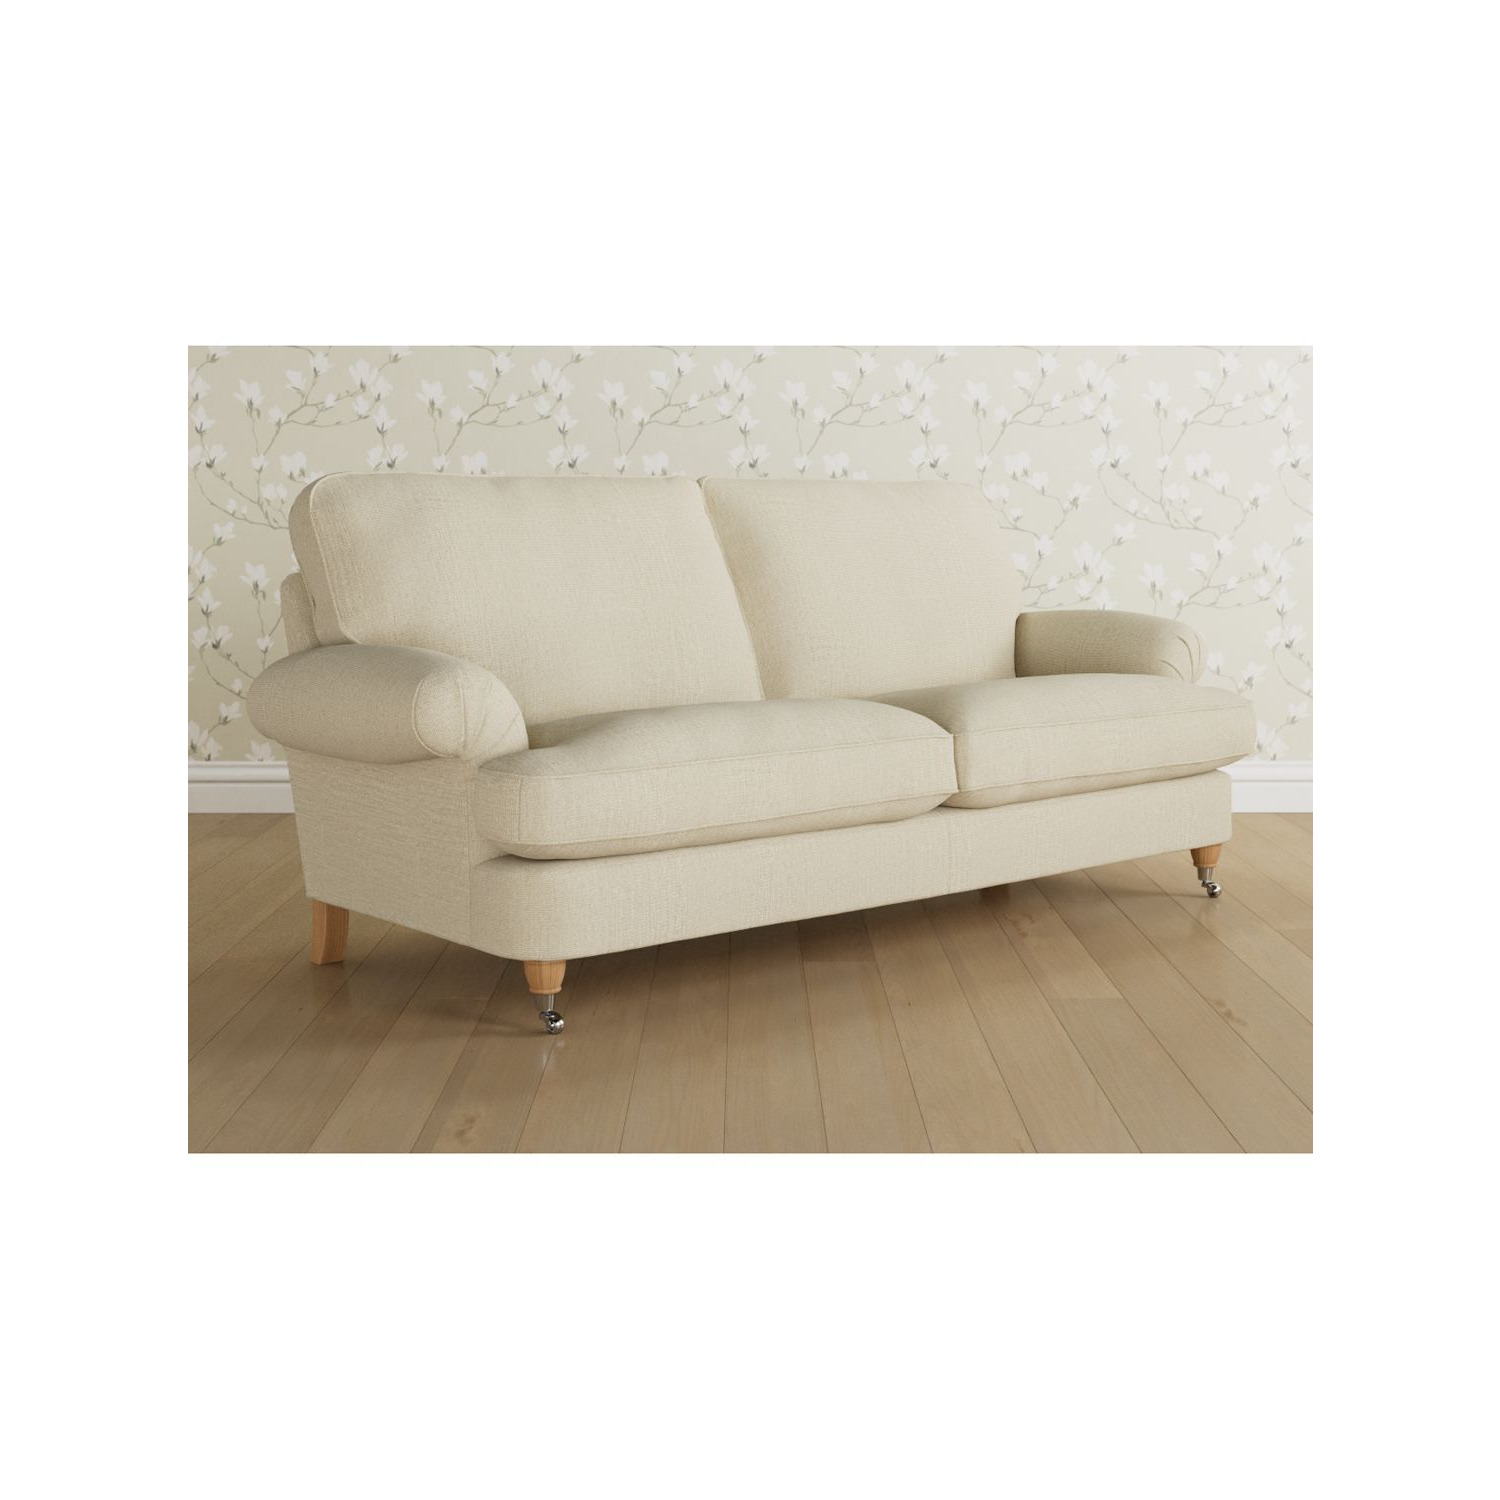 Laura Ashley Beaumaris Large 3 Seater Sofa, Oak Leg - image 1